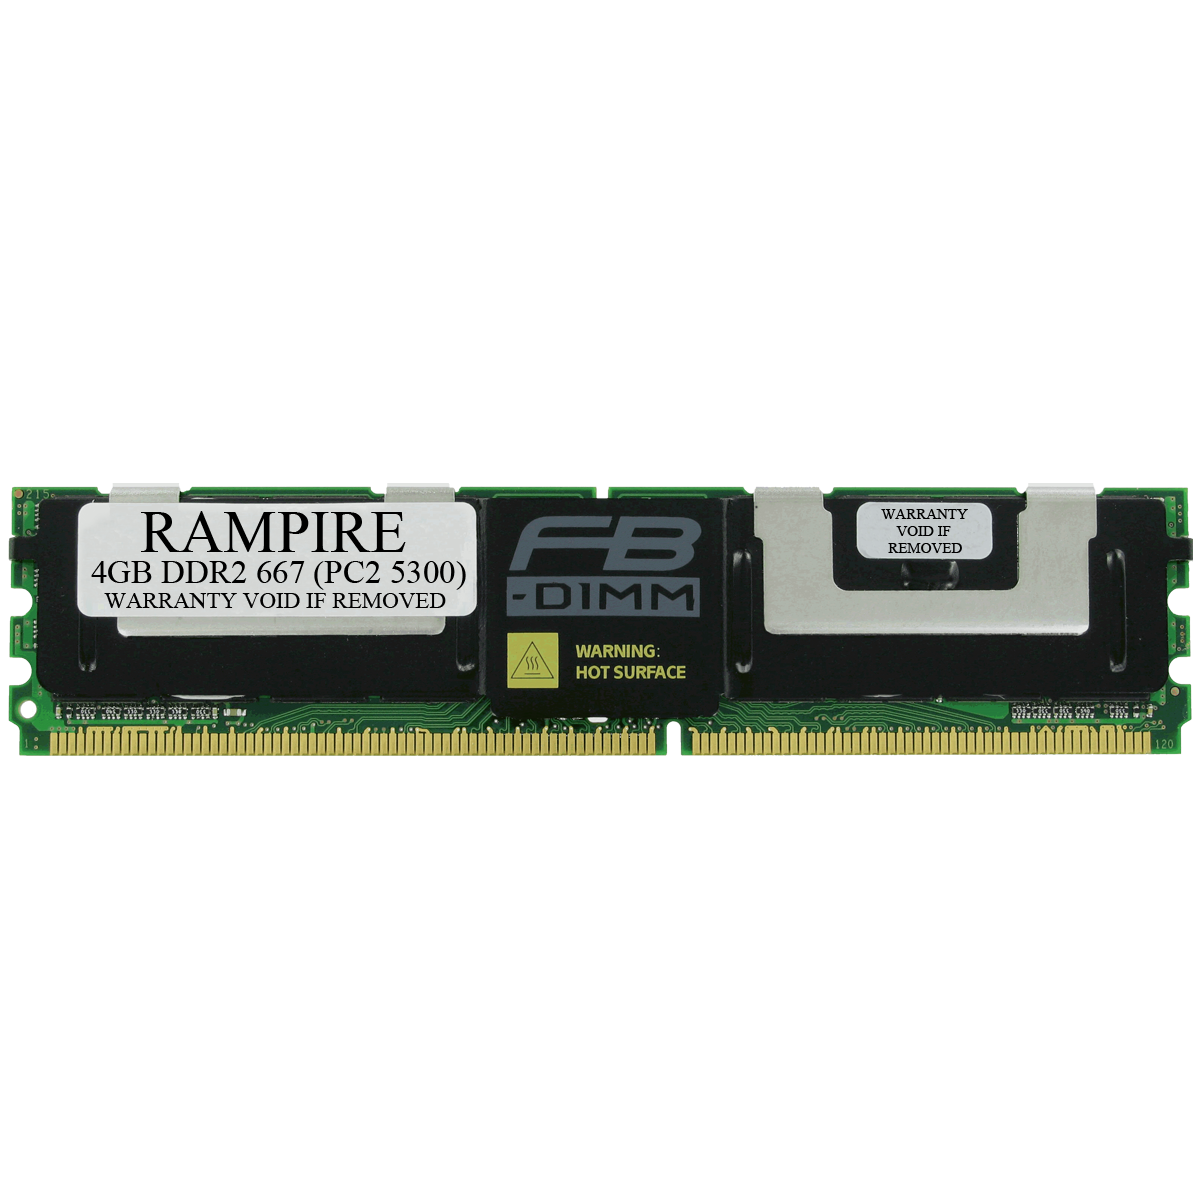 RAMPIRE 4GB DDR2 667 (PC2 5300) 240-Pin SDRAM 2Rx4 Standard Profile 1.8V ECC Fully Buffered Server Memory